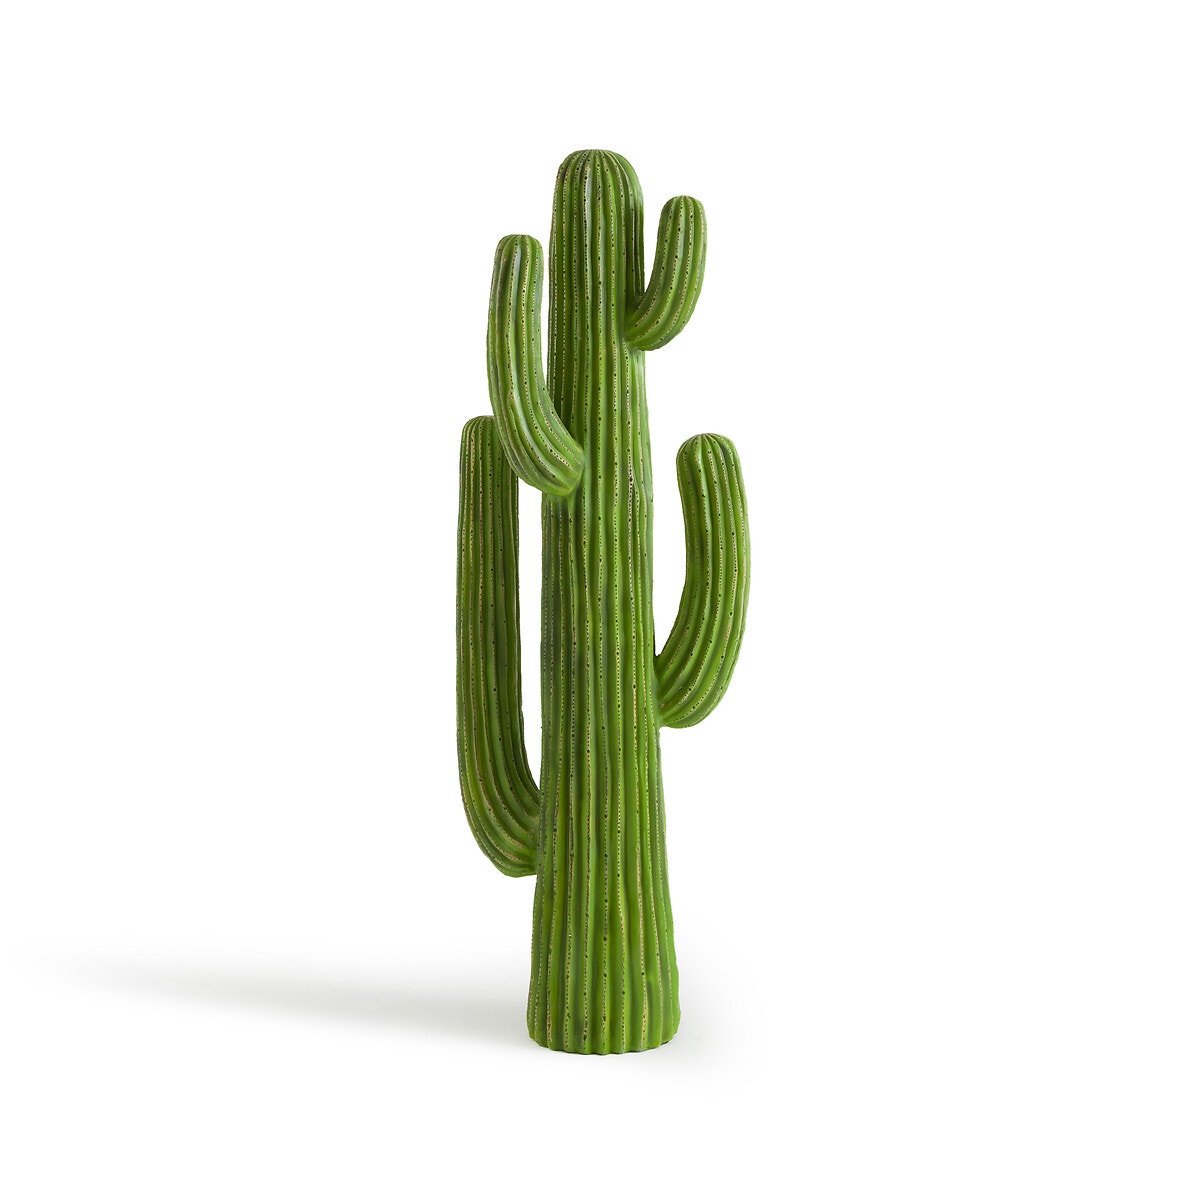 Cactus résine grande taille h124 cm, Quevedo